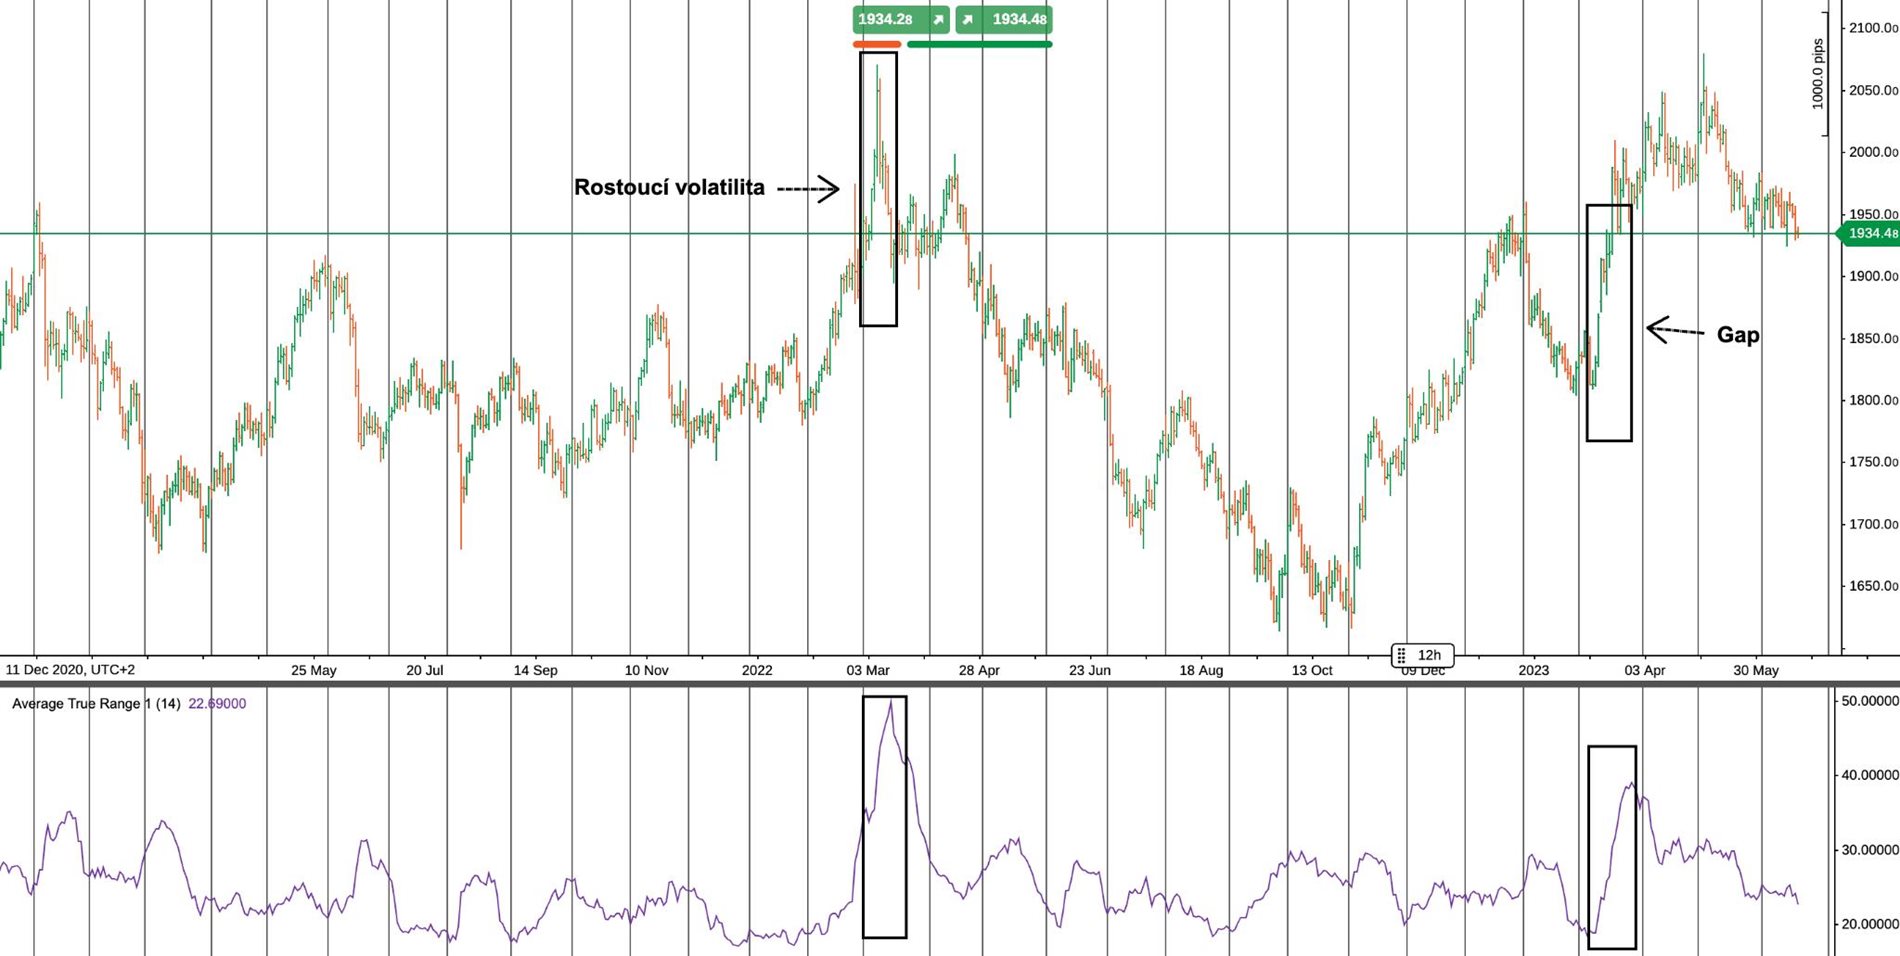 Long-term volatility on XAU/USD according to the ATR indicator 